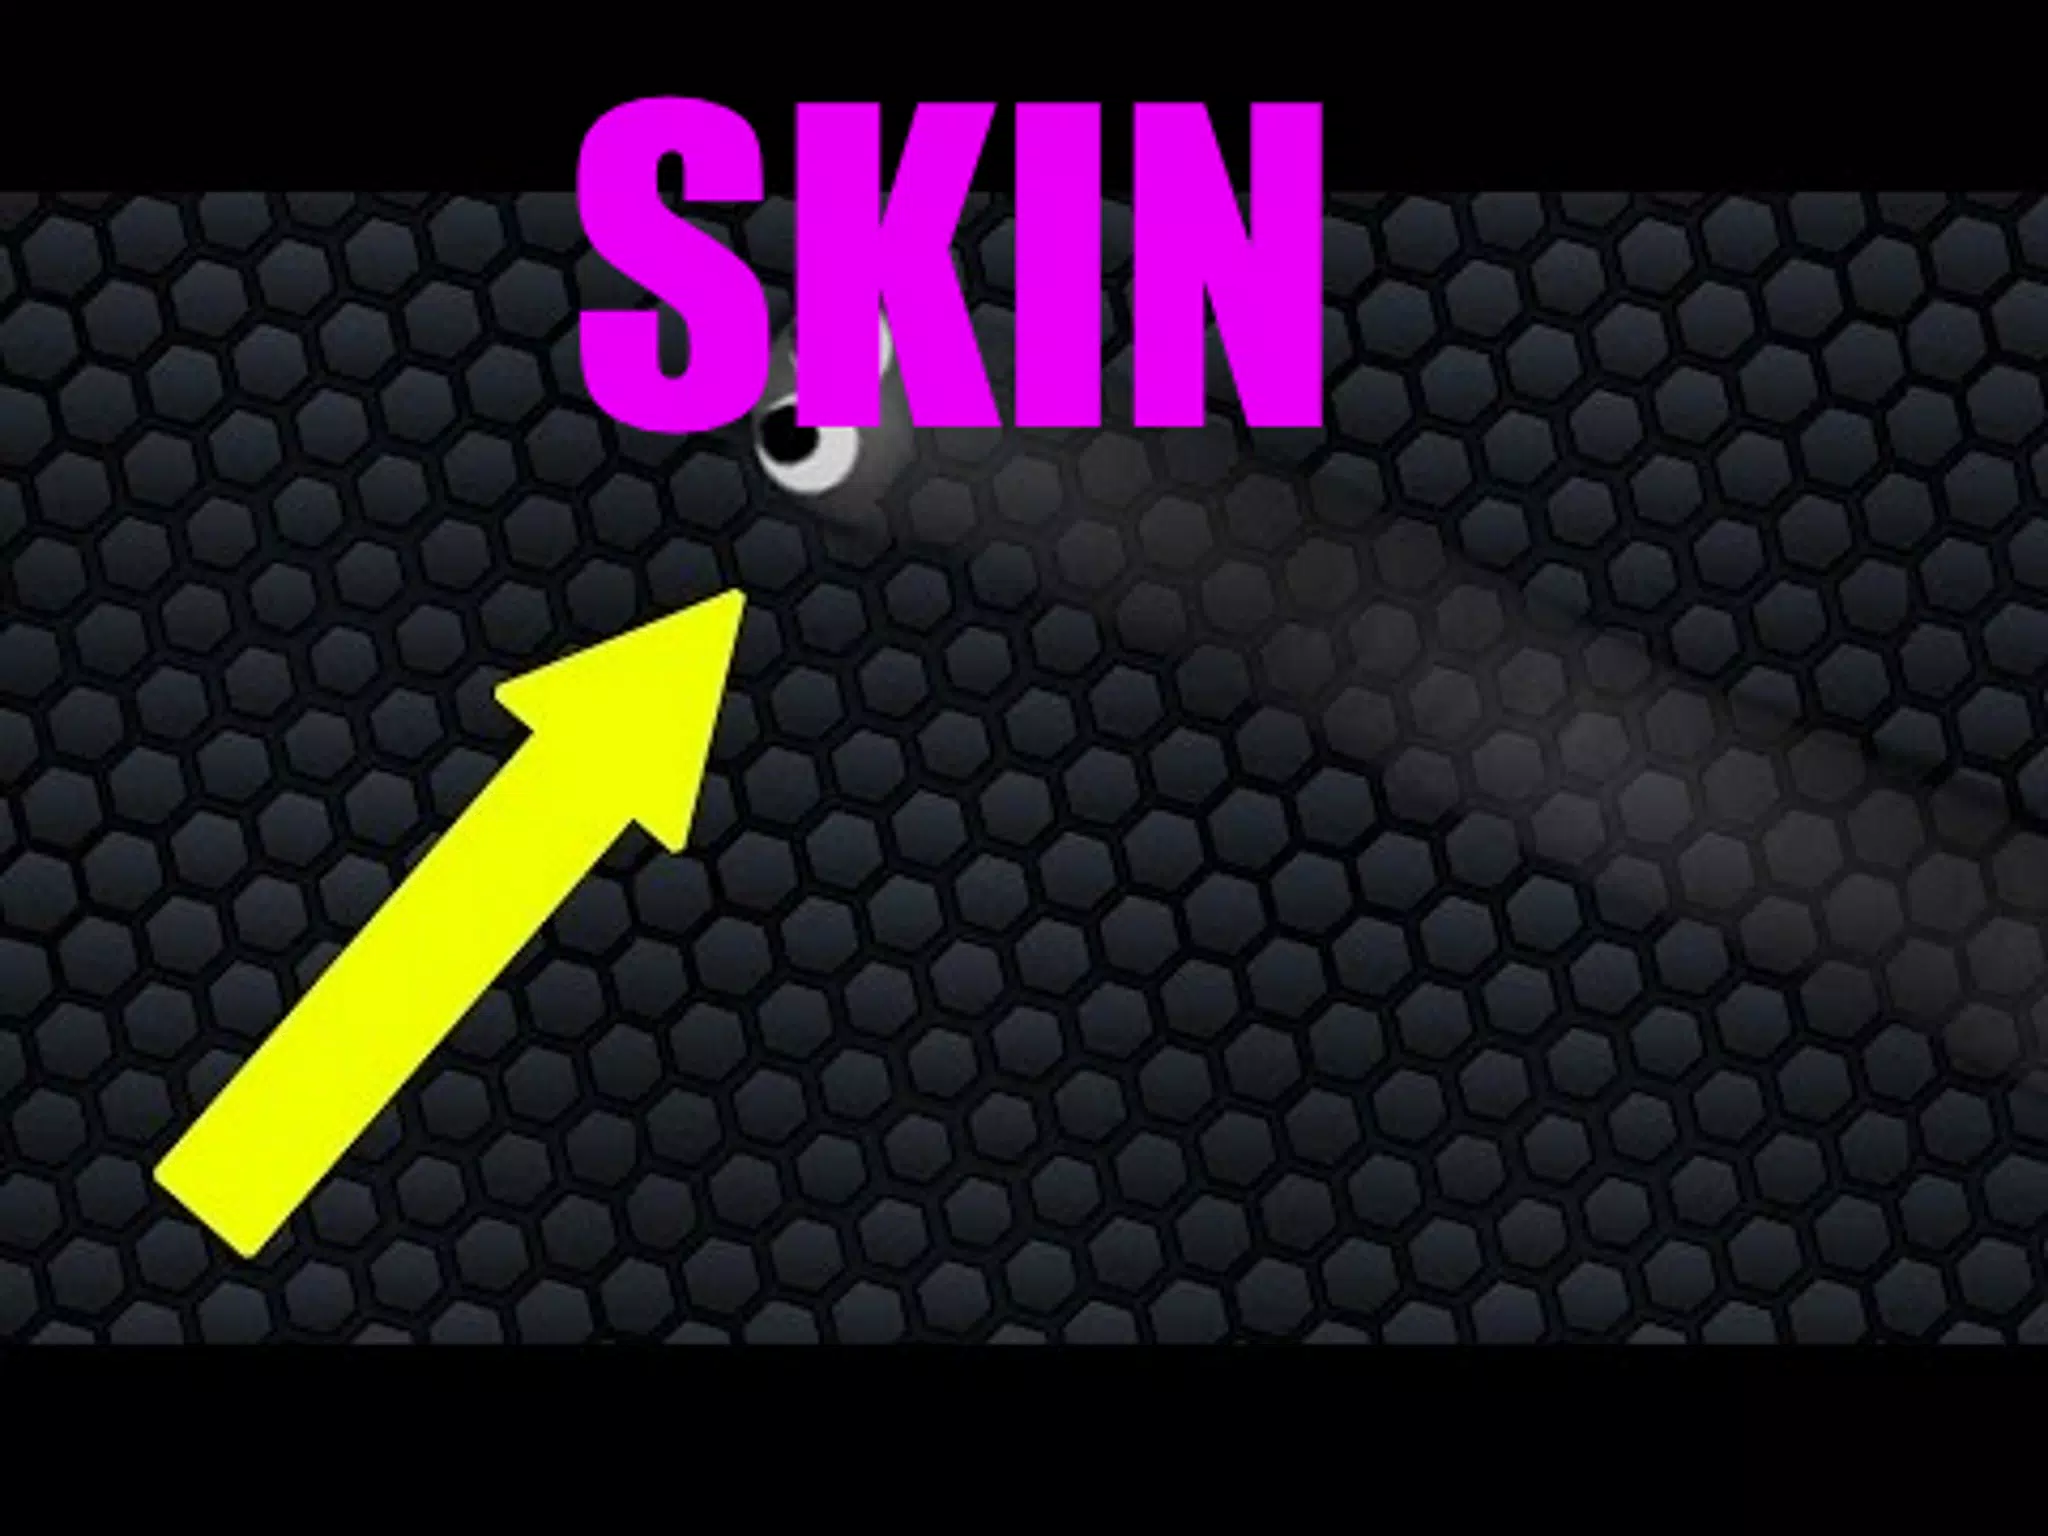 Invisible Skin For Splix.io App Download 2023 - Gratis - 9Apps